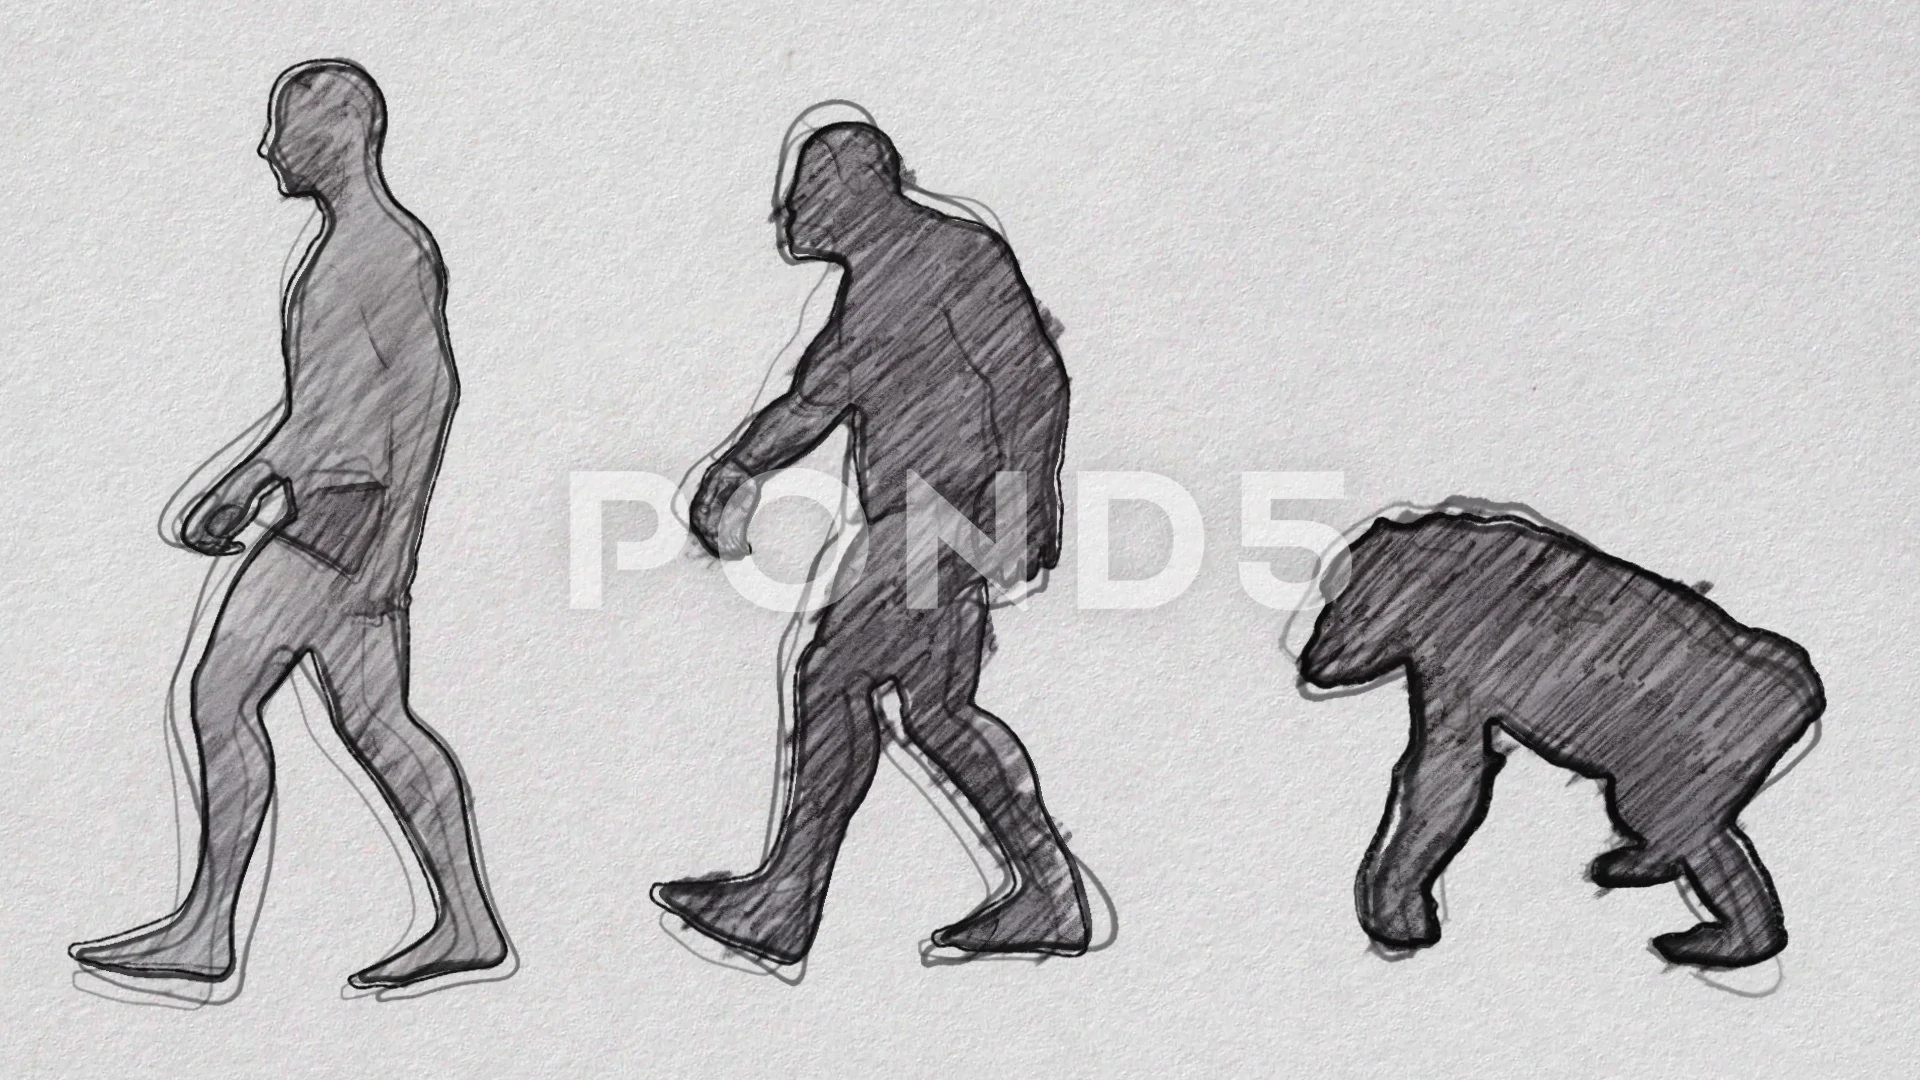 71400 Man Walking Illustrations RoyaltyFree Vector Graphics  Clip Art   iStock  Man walking dog Business man walking Man walking away